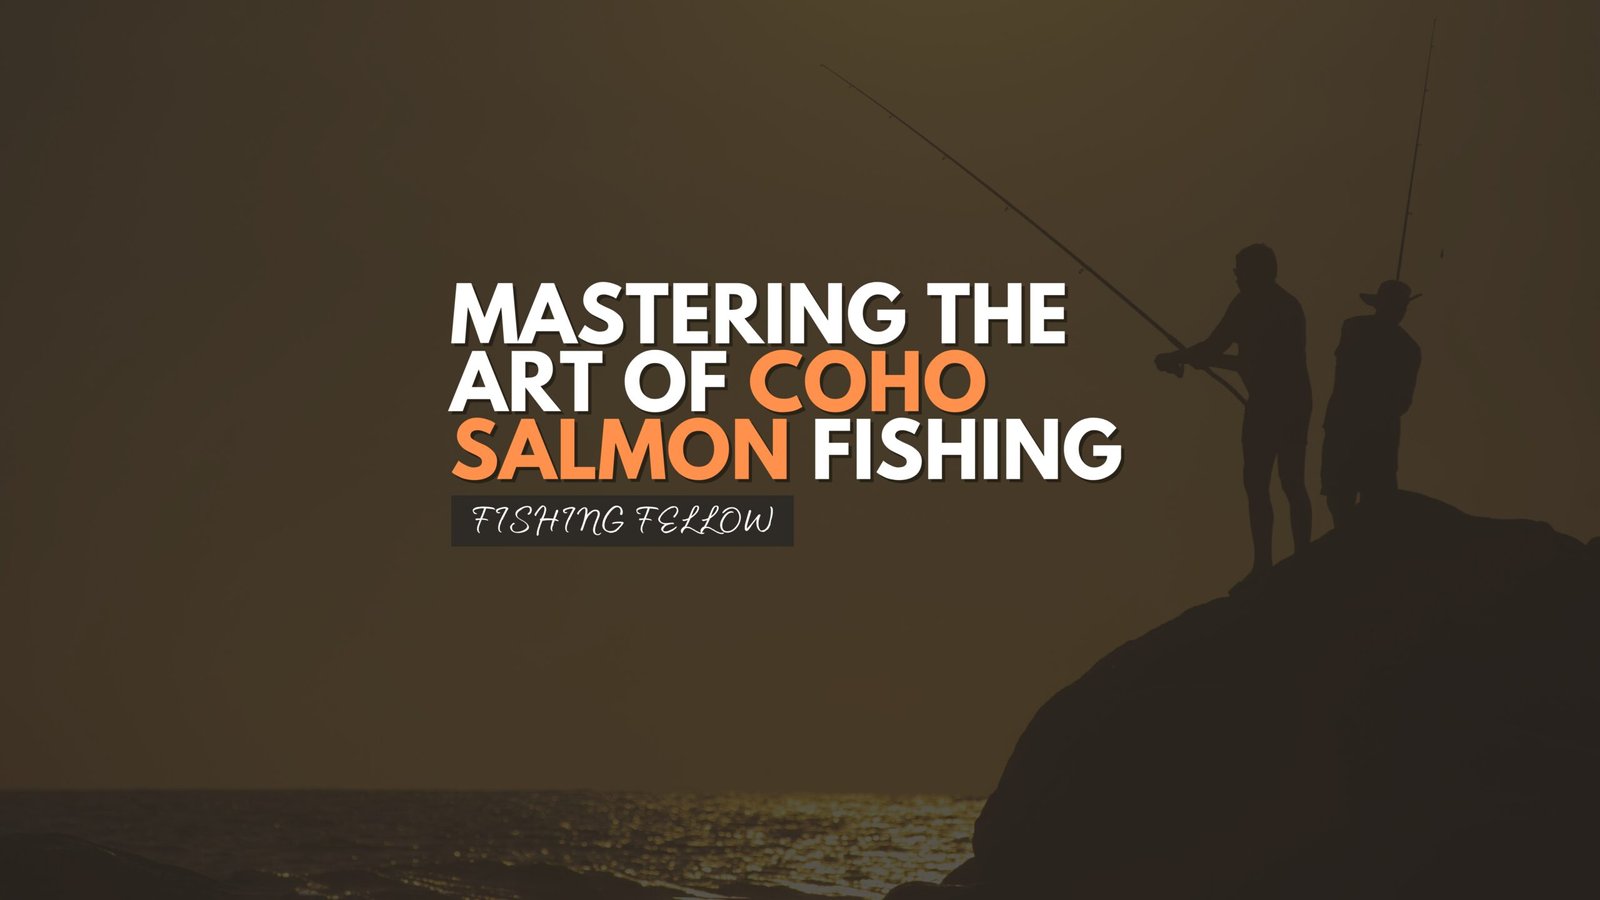 Mastering the Art of Coho Salmon Fishing